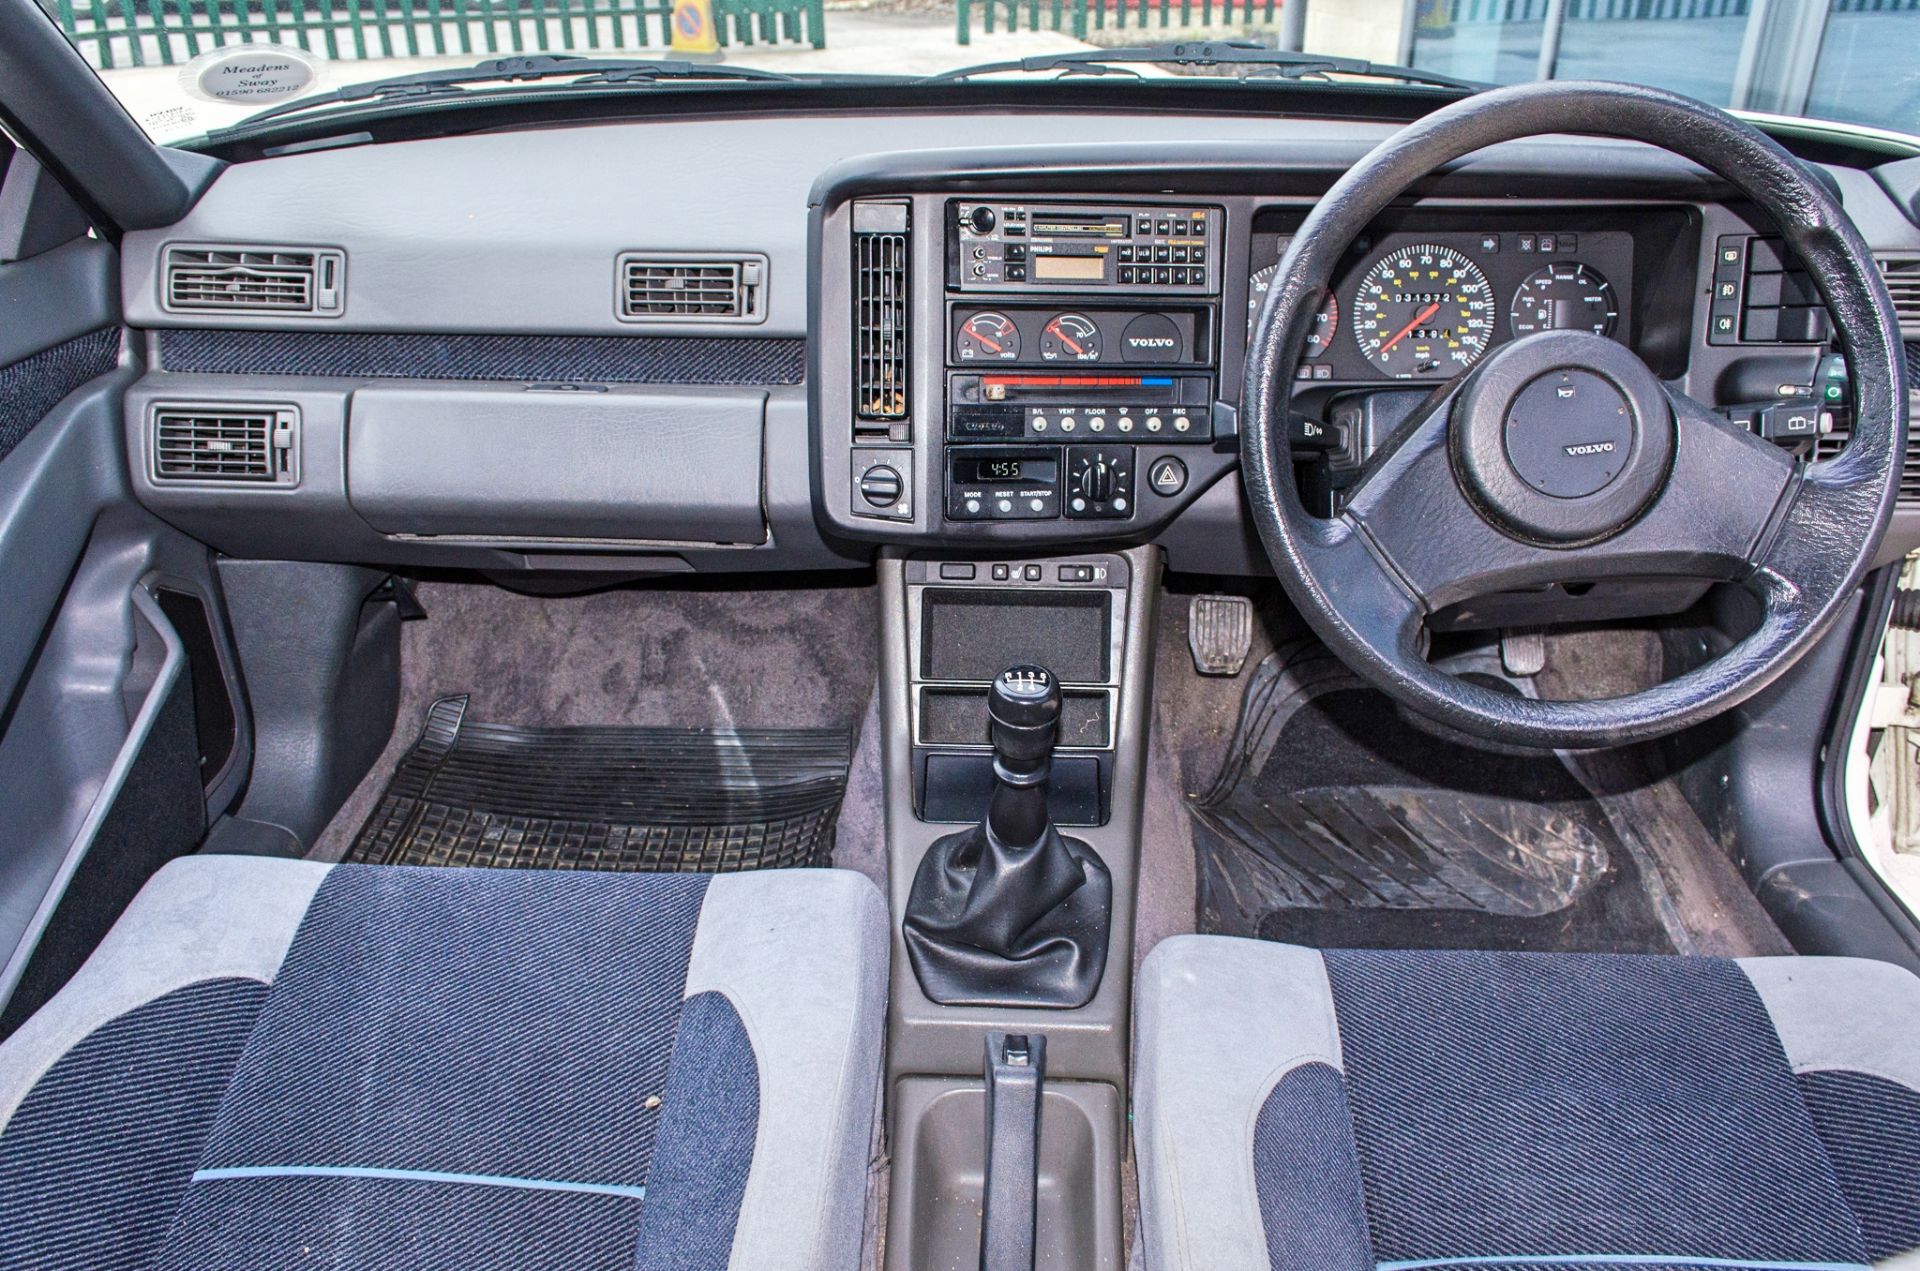 1987 Volvo 480 ES 1721CC 3 door hatchback Guide; £2,000 to £3,000  Registration: E517LHV Chassis: - Image 42 of 56